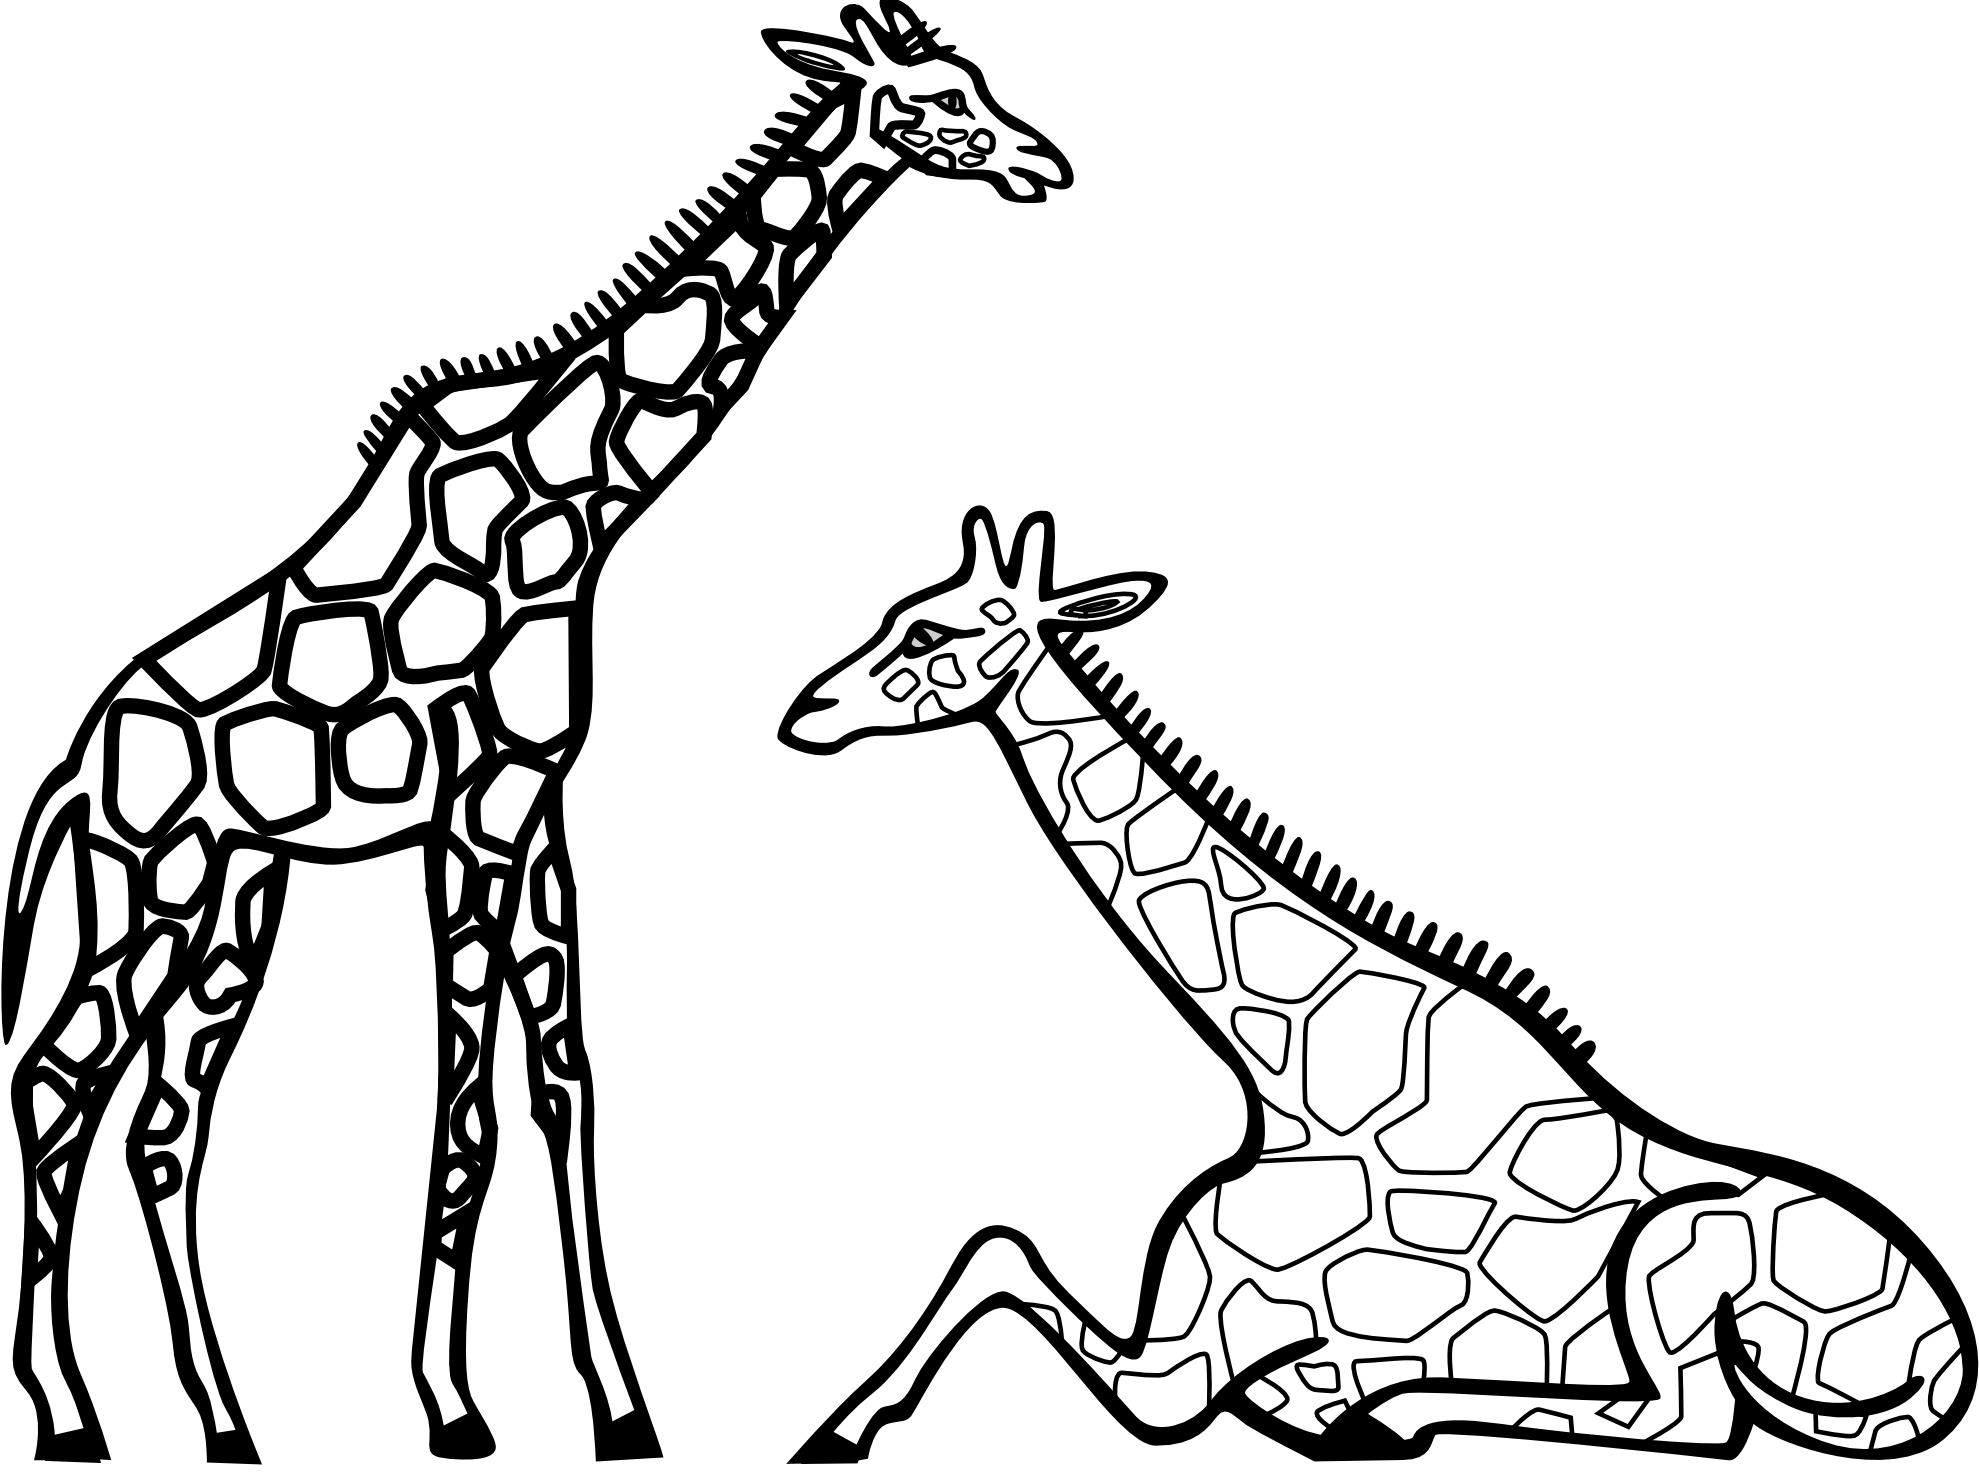 Cartoon Giraffe Black And White Widescreen 2 HD Wallpapers ...